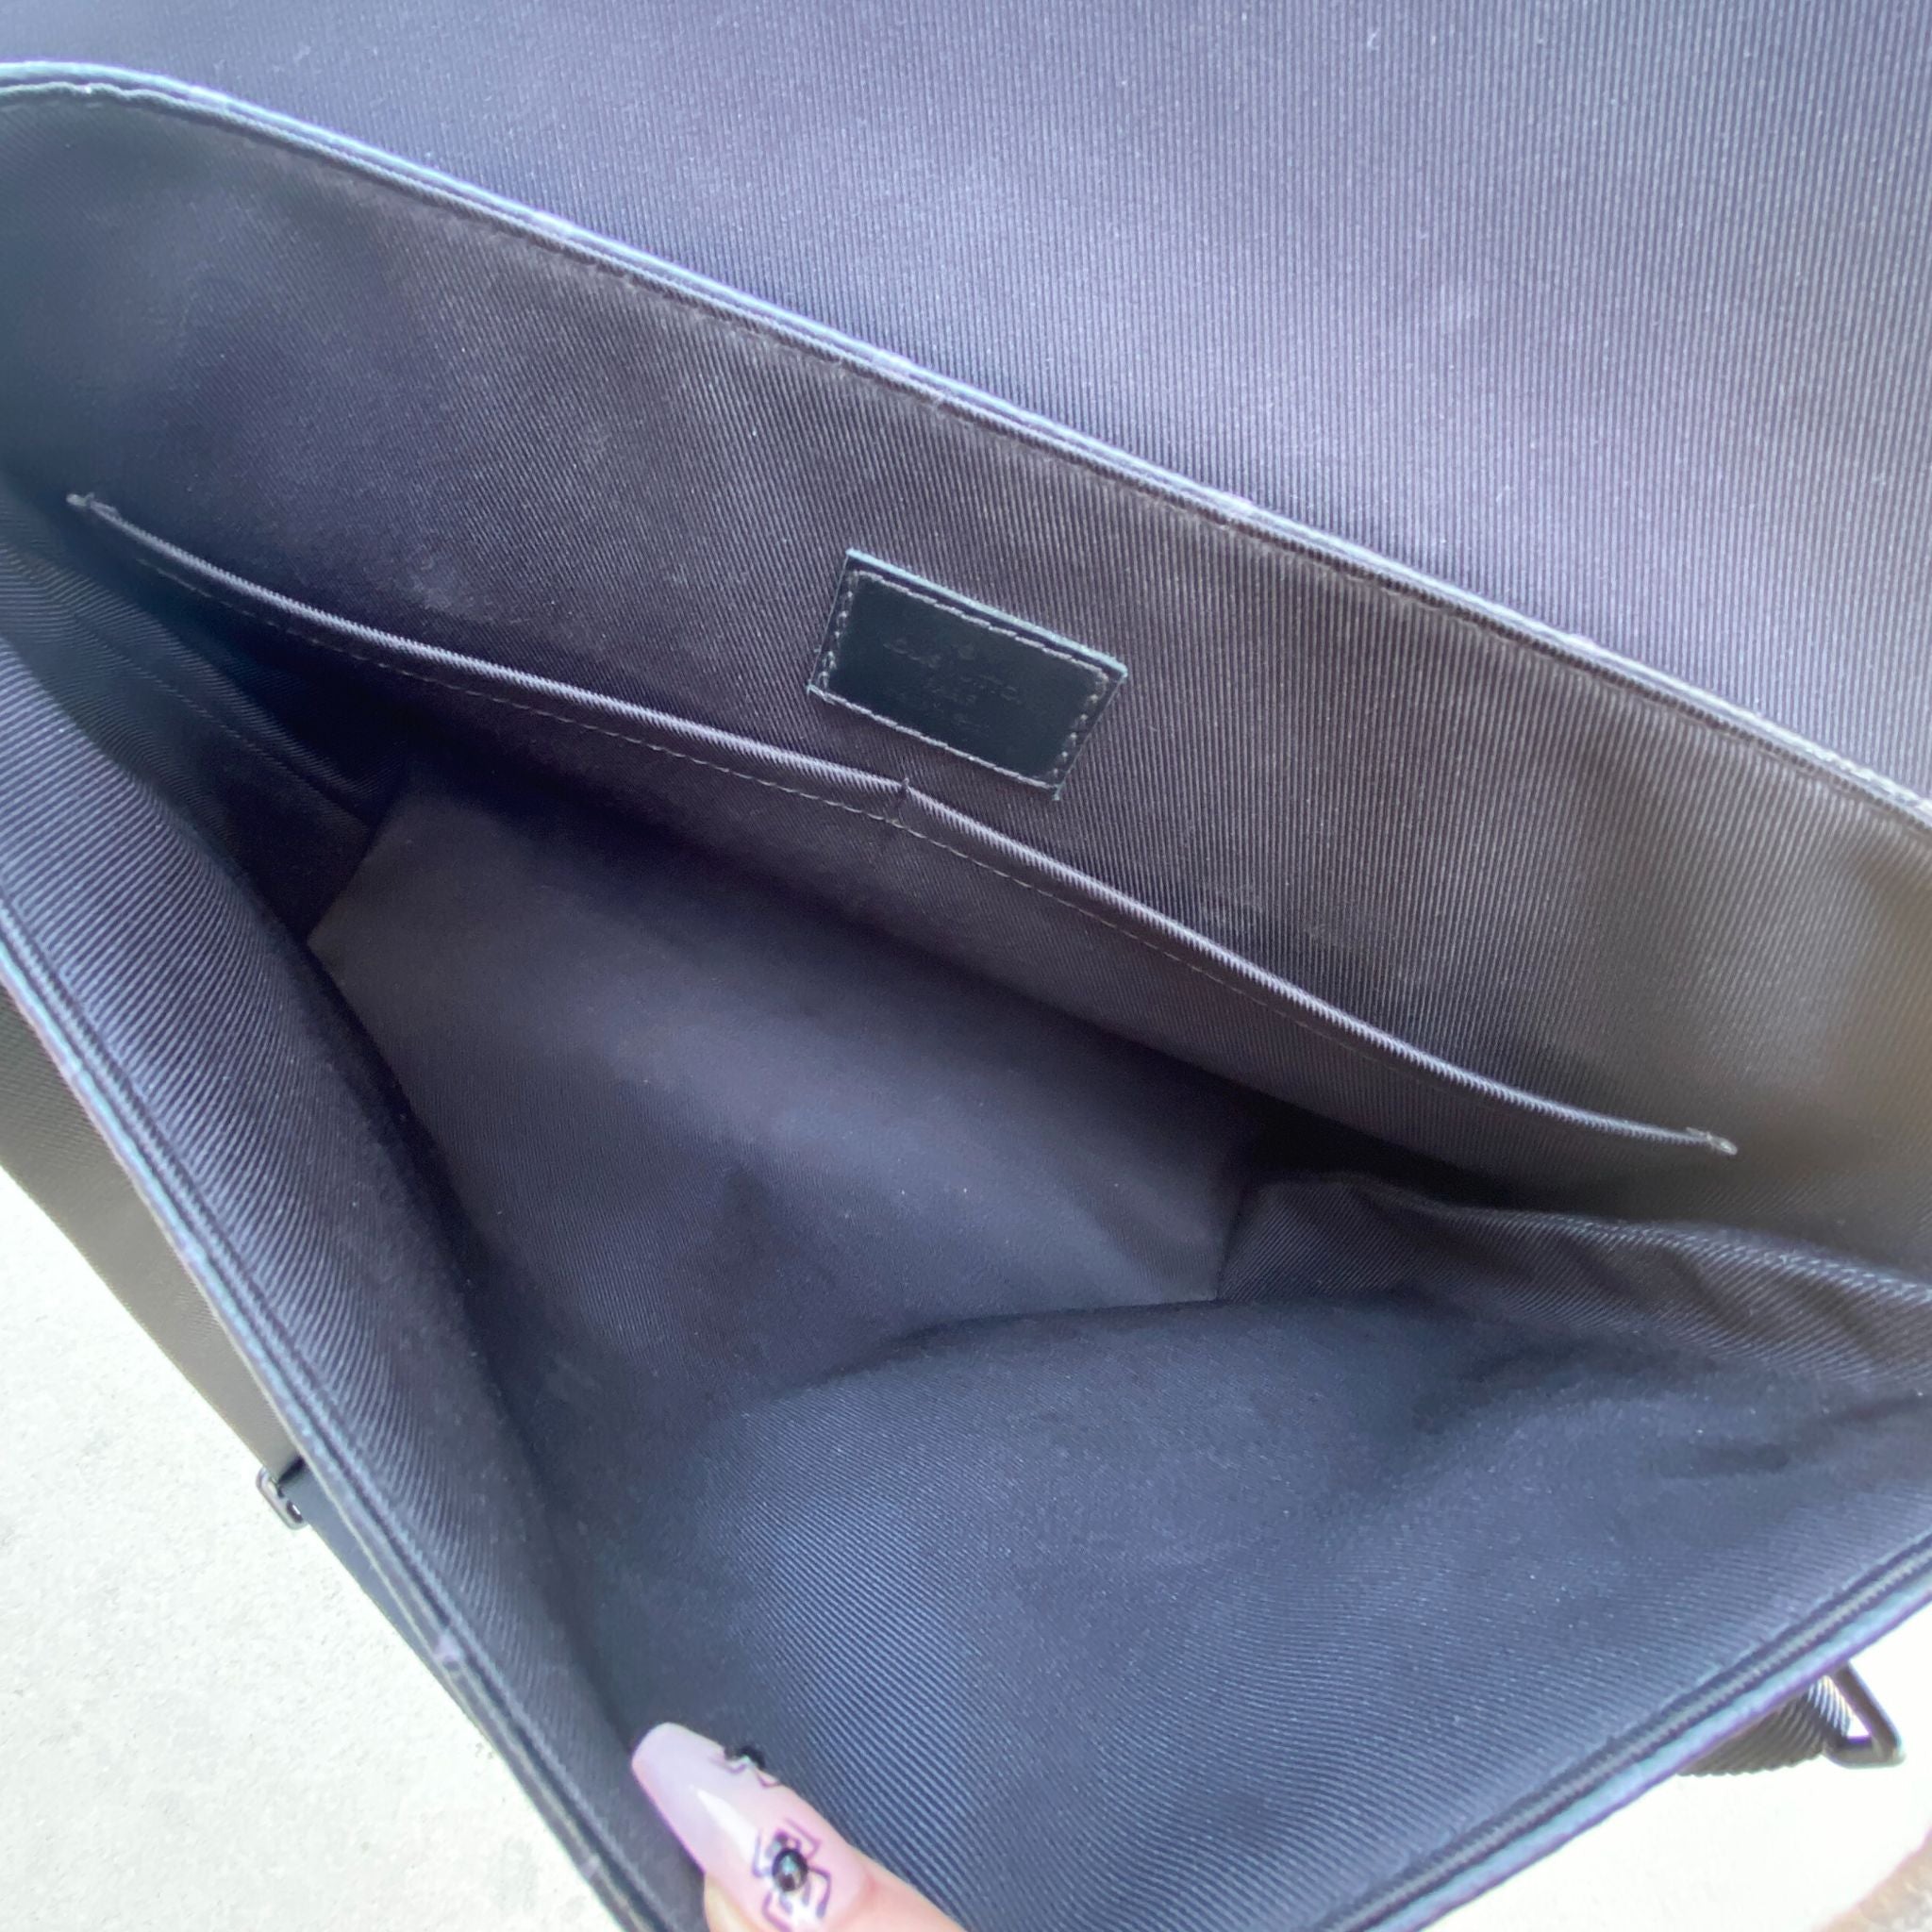 Louiss Vuitton Bag LV Saumur Messenger Monogram Eclipse With Dust Bag  (Embossed Black - 421) (J1668) - KDB Deals